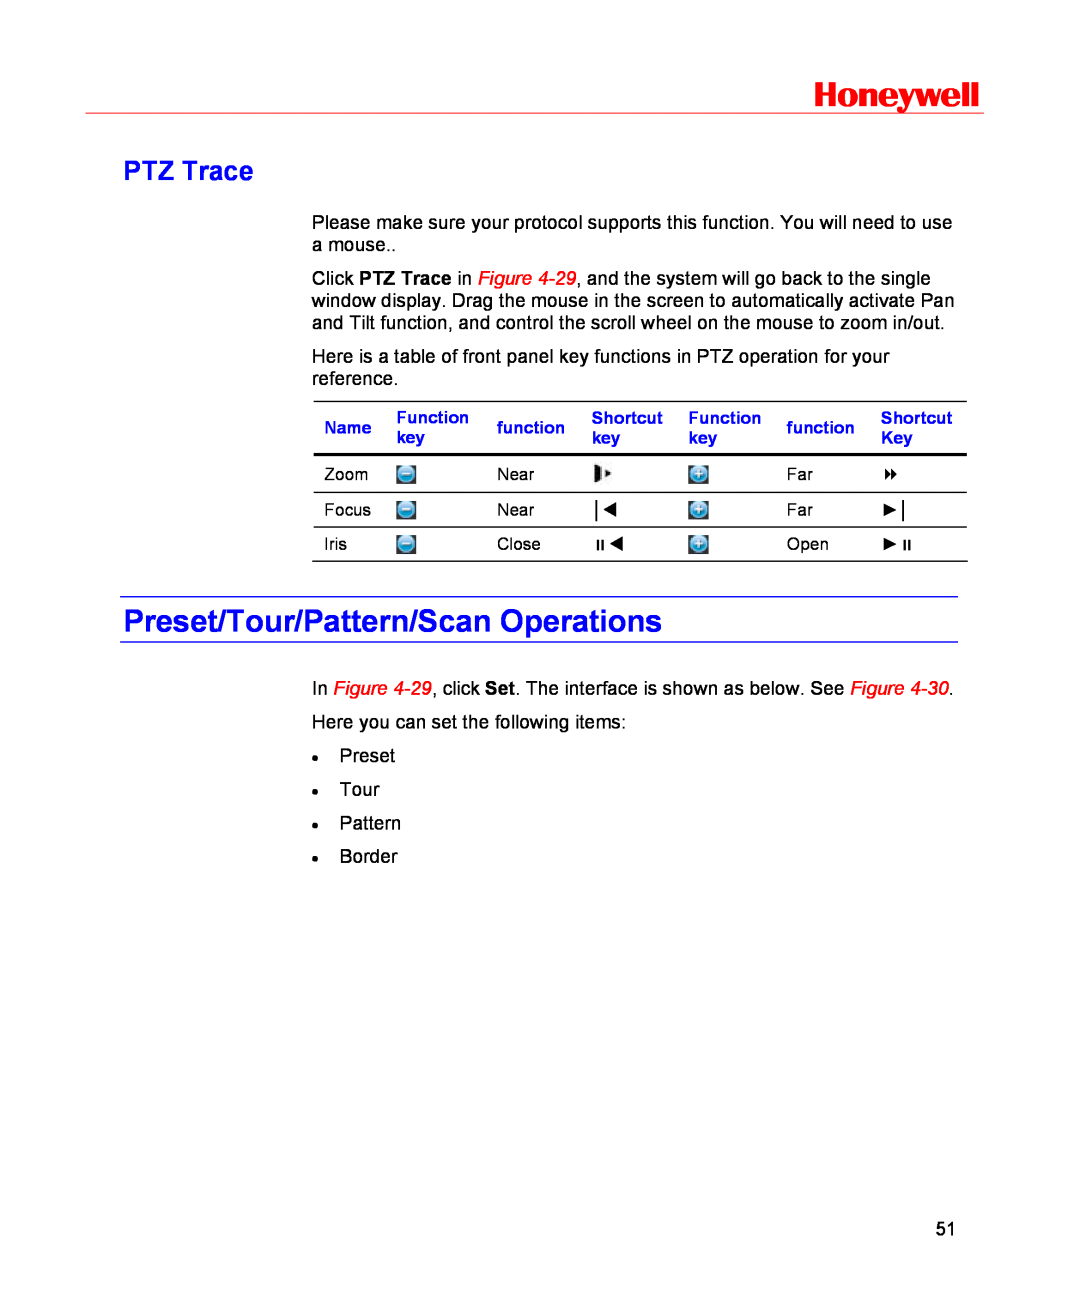 Honeywell HSVR-16, HSVR-04 user manual Preset/Tour/Pattern/Scan Operations, PTZ Trace, Honeywell 